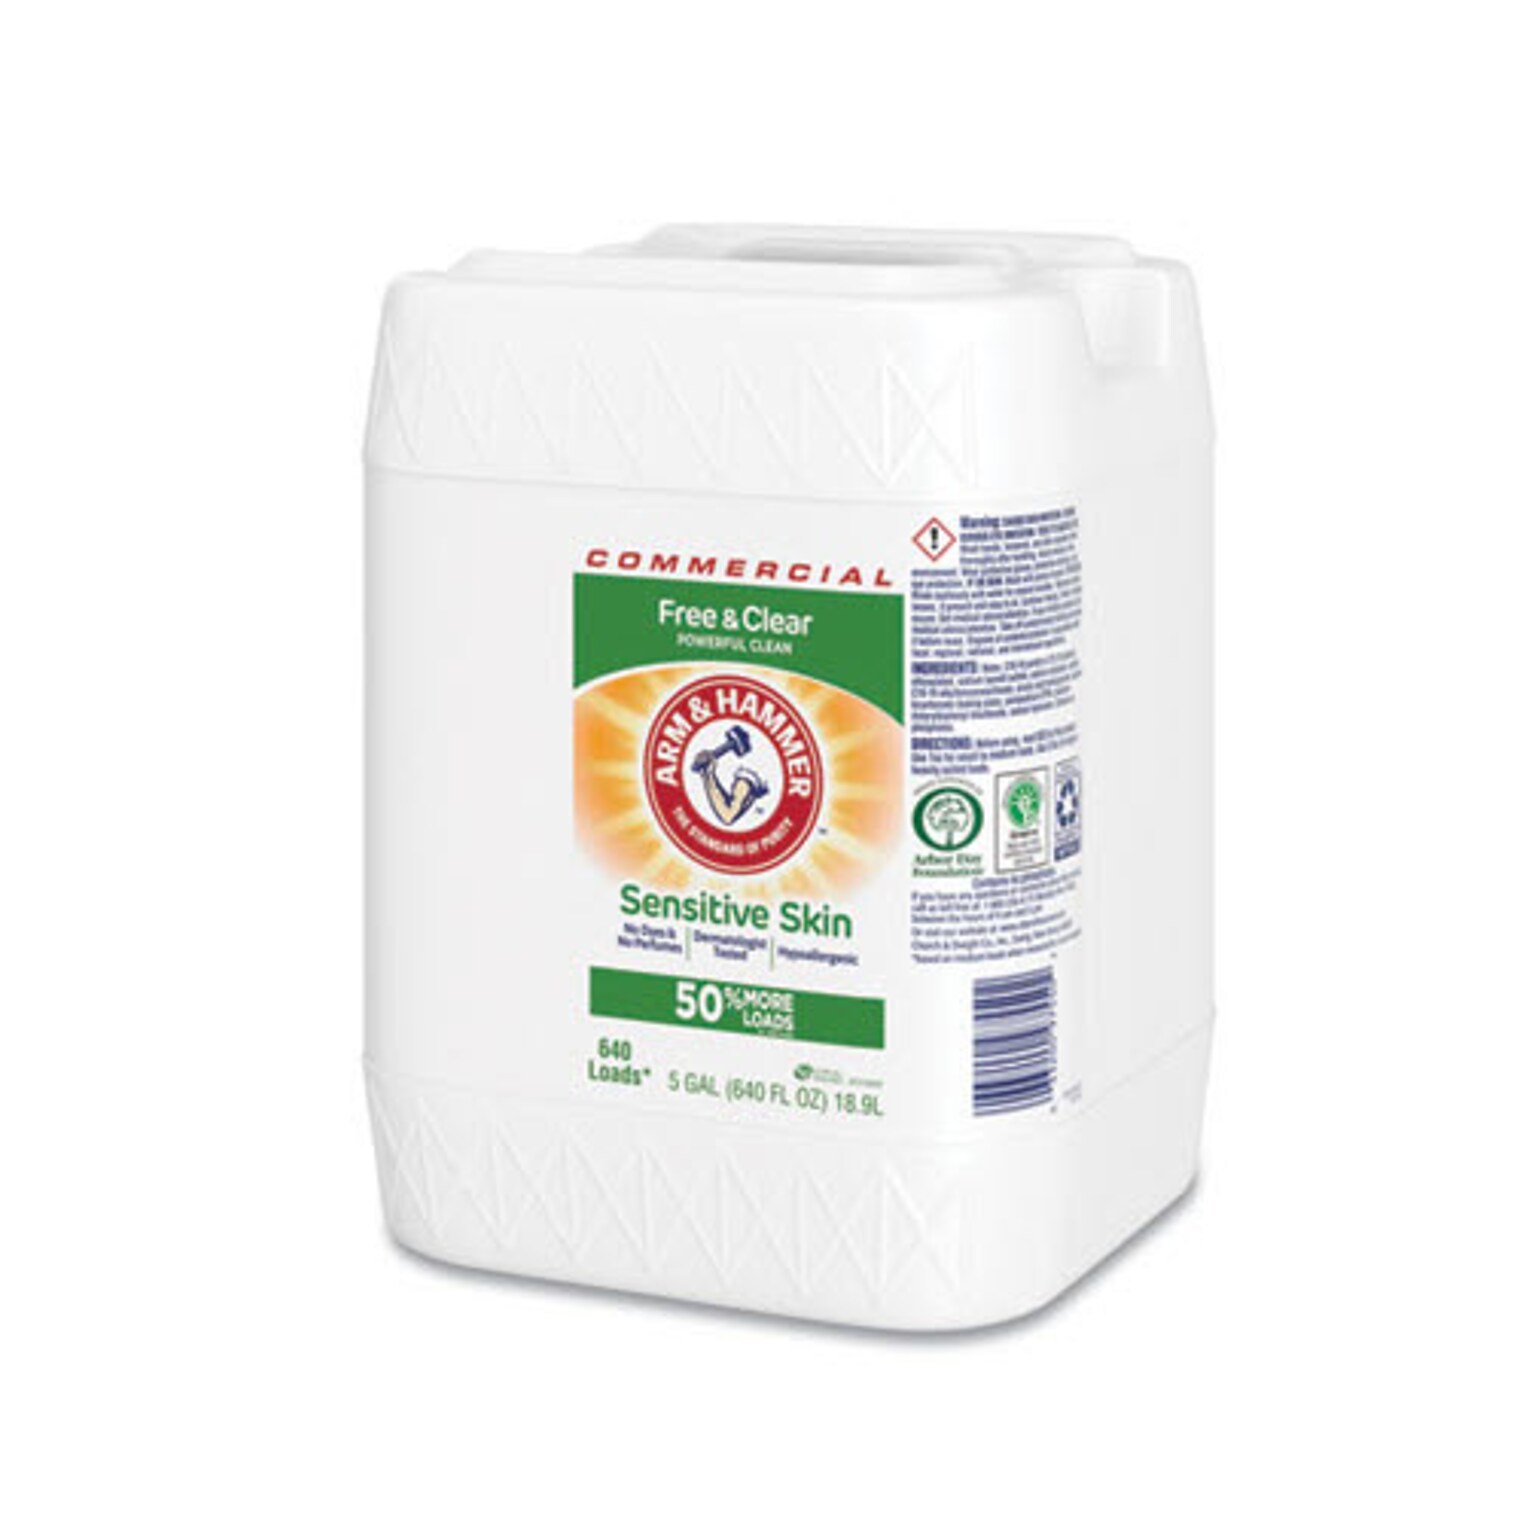 Arm & Hammer™ HE Liquid Laundry Detergent, Unscented, 640 oz. (CDC3320097550)